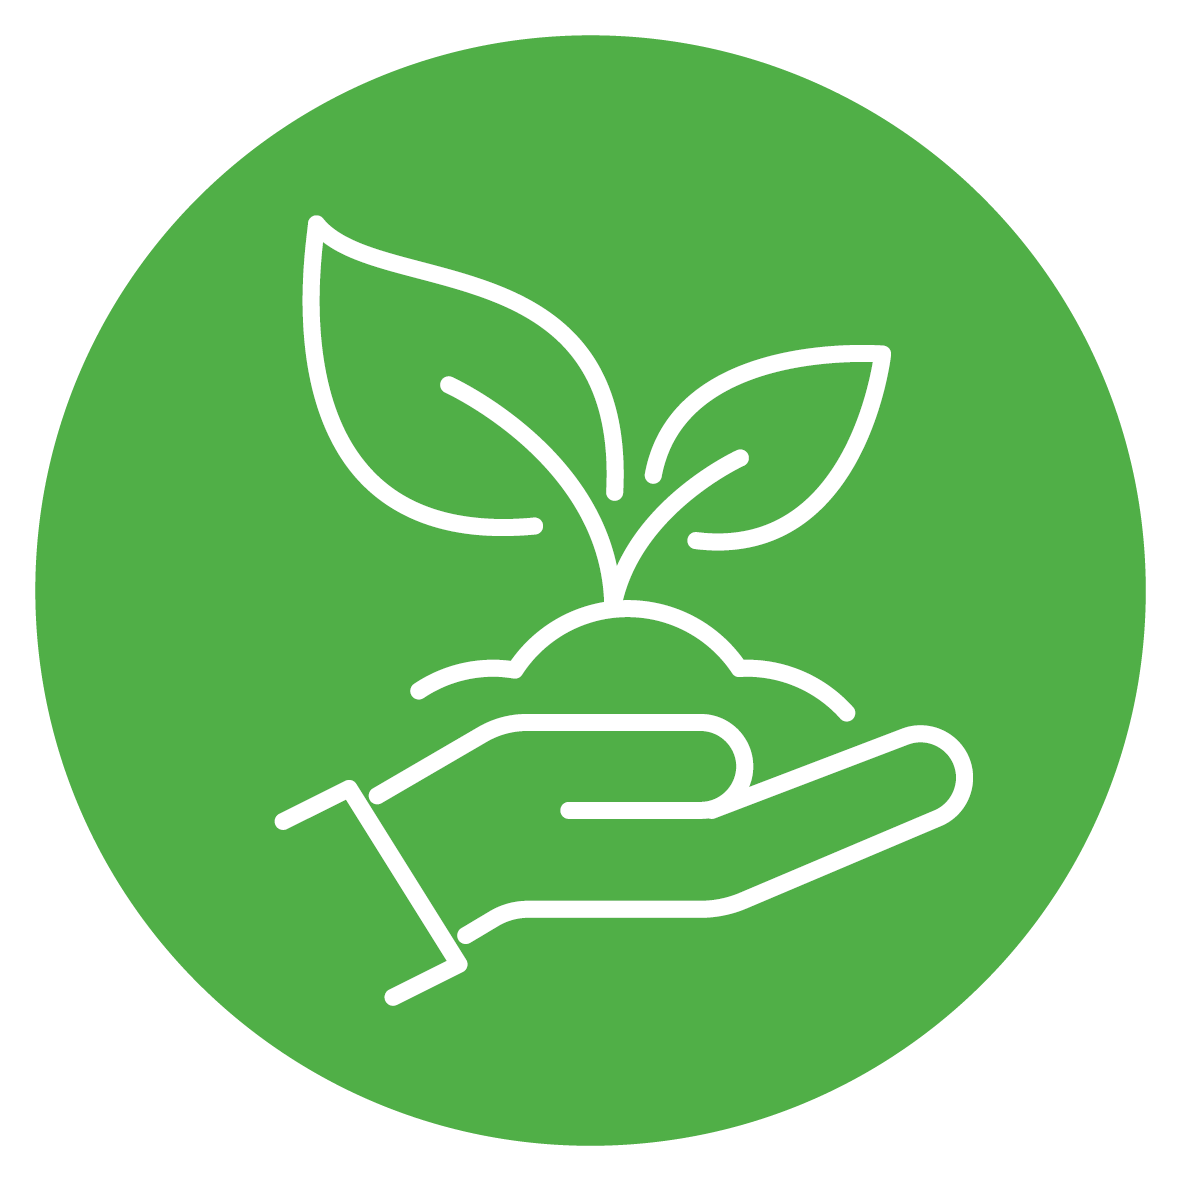 Logo representing natural environment